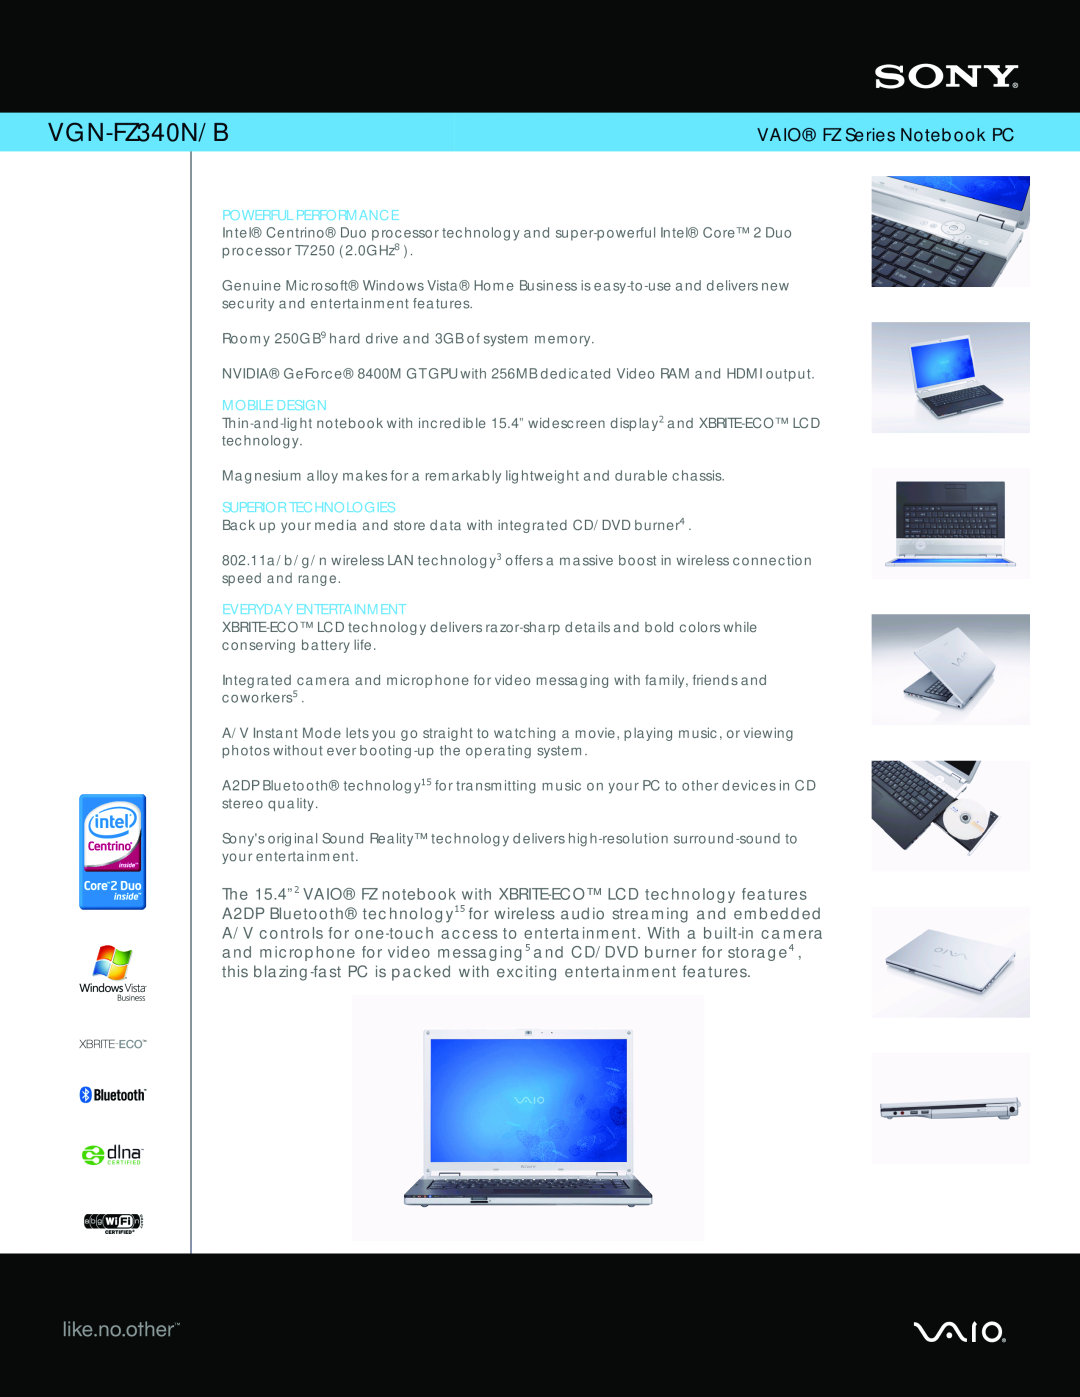 Sony VGN-FZ340B manual VGN-FZ340N/B, VAIO FZ Series Notebook PC, Powerful Performance, Mobile Design 